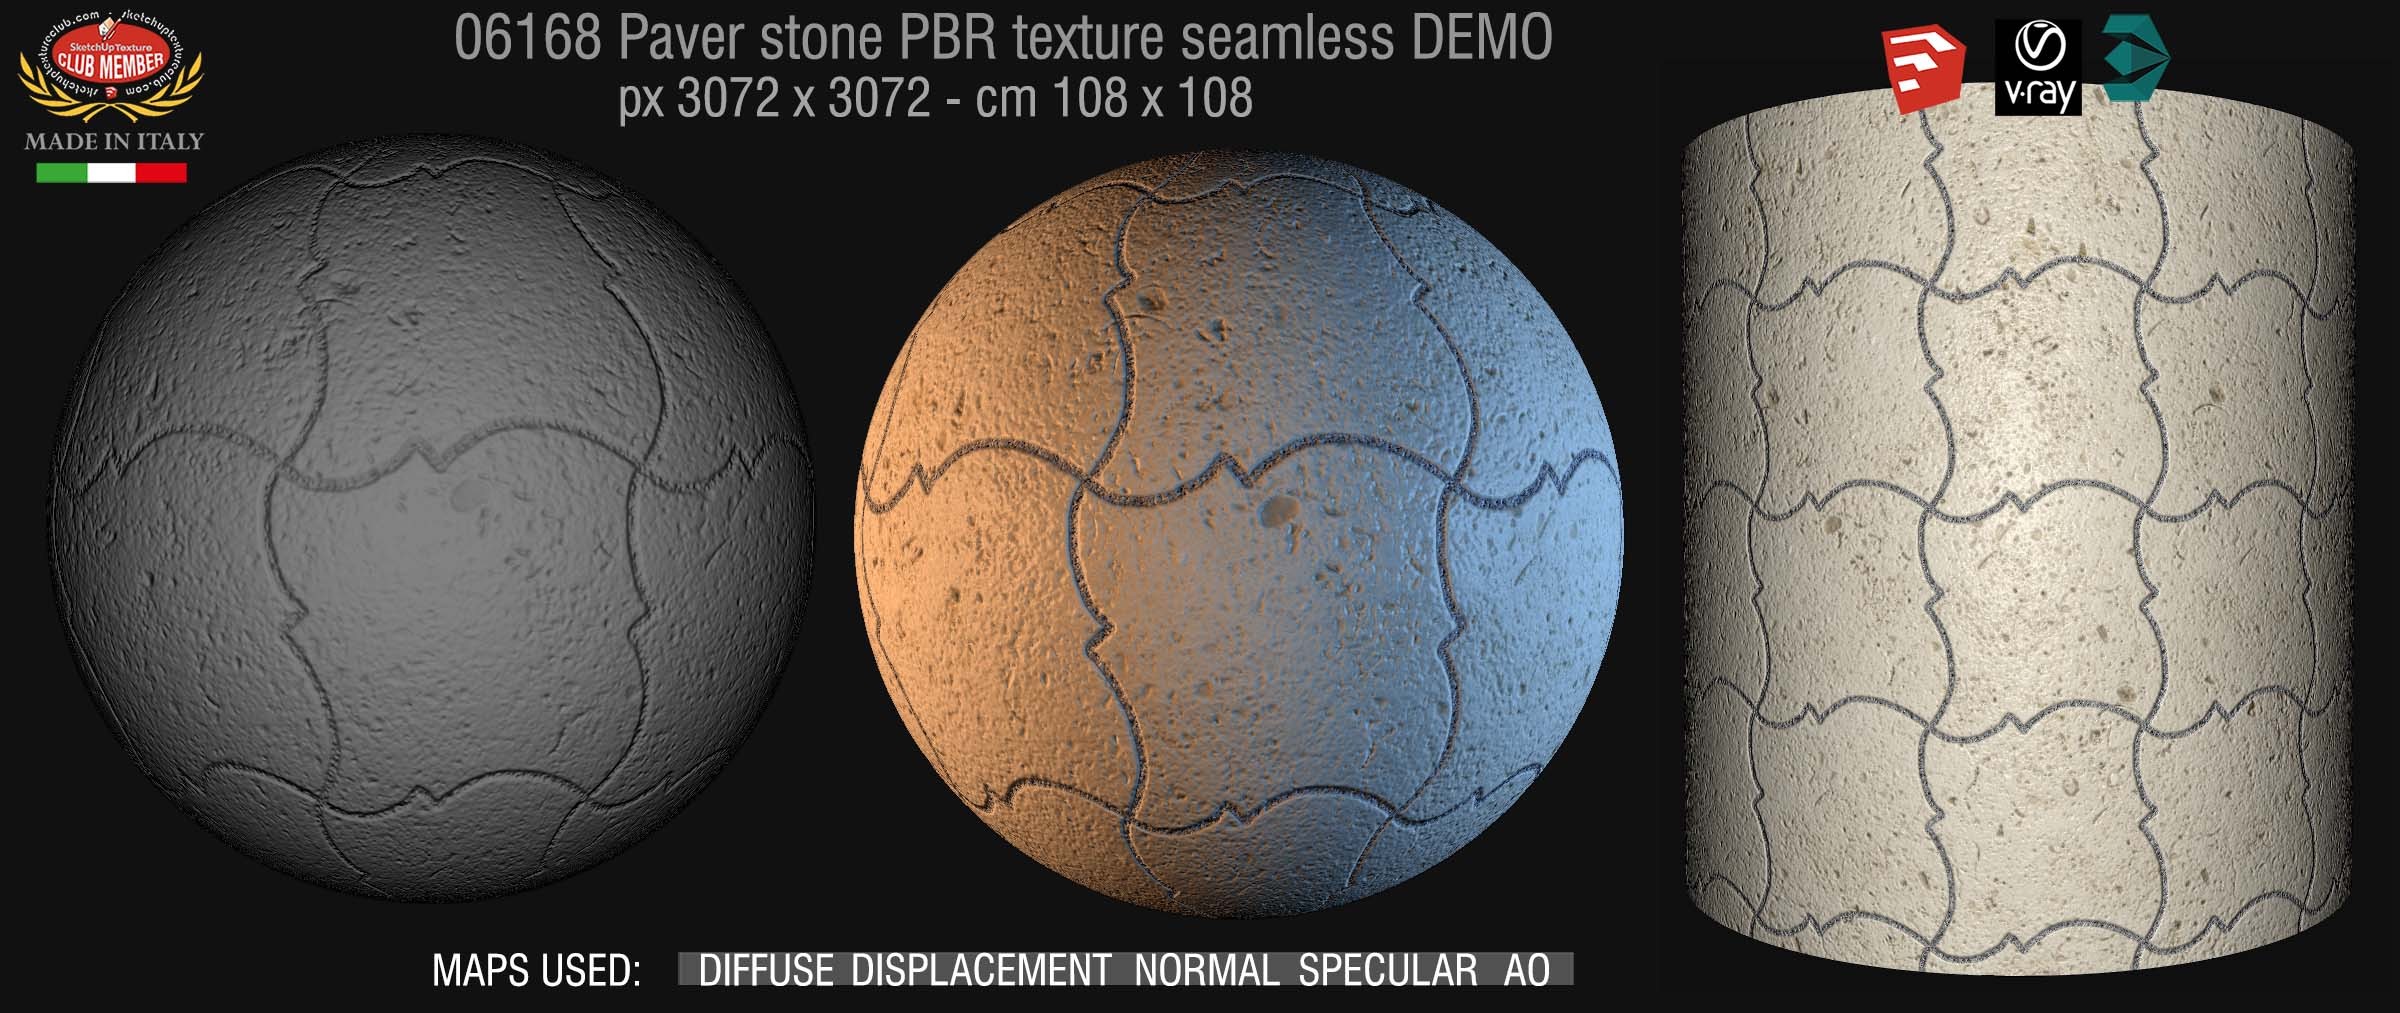 06168 paver stone PBR texture seamless DEMO